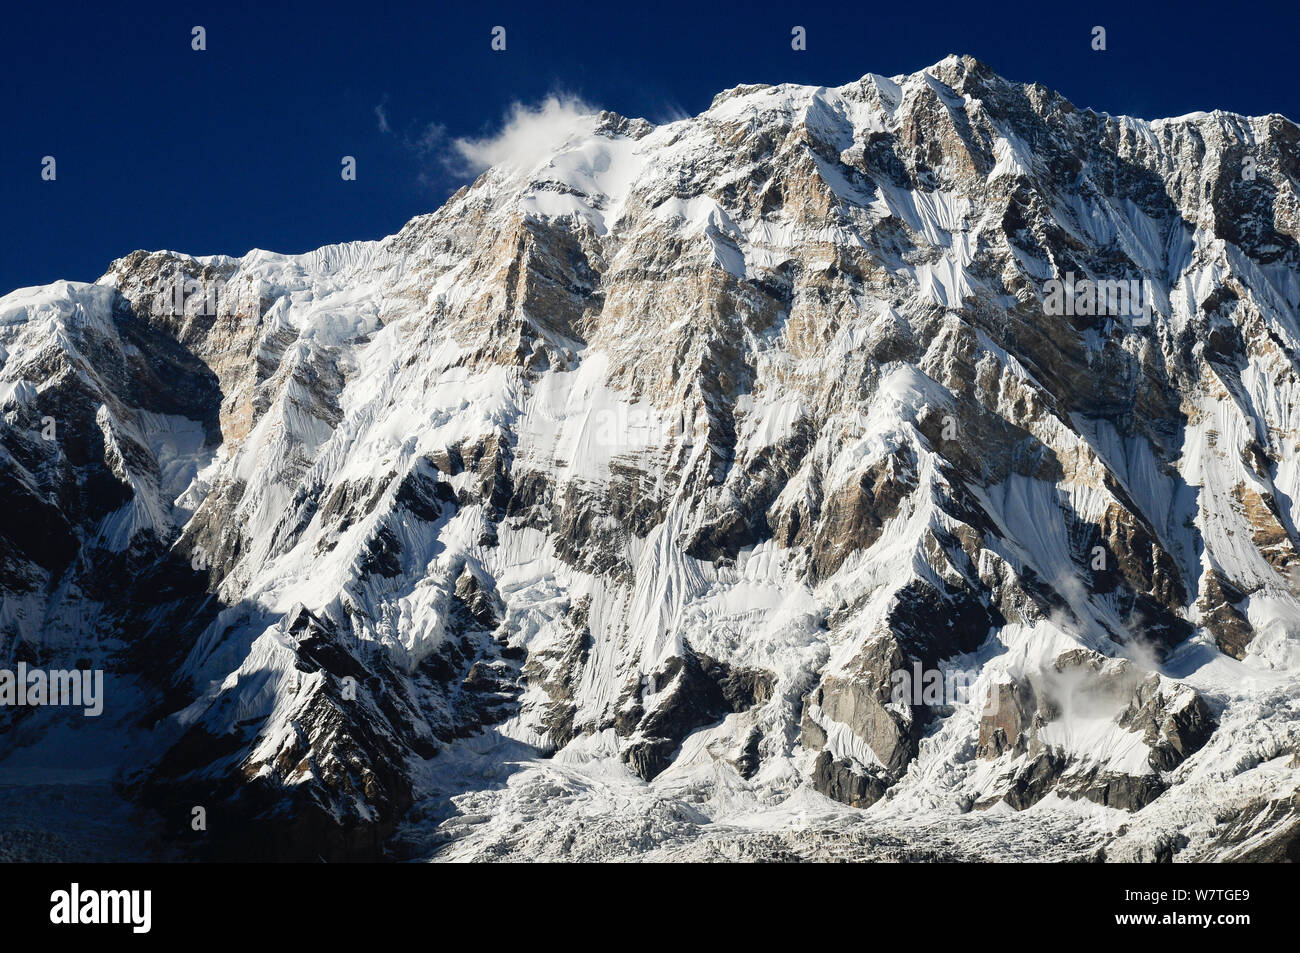 Monte Annapurna i (8091m) desde el campamento base, santuario de Annapurna, Nepal central, noviembre de 2011. Foto de stock